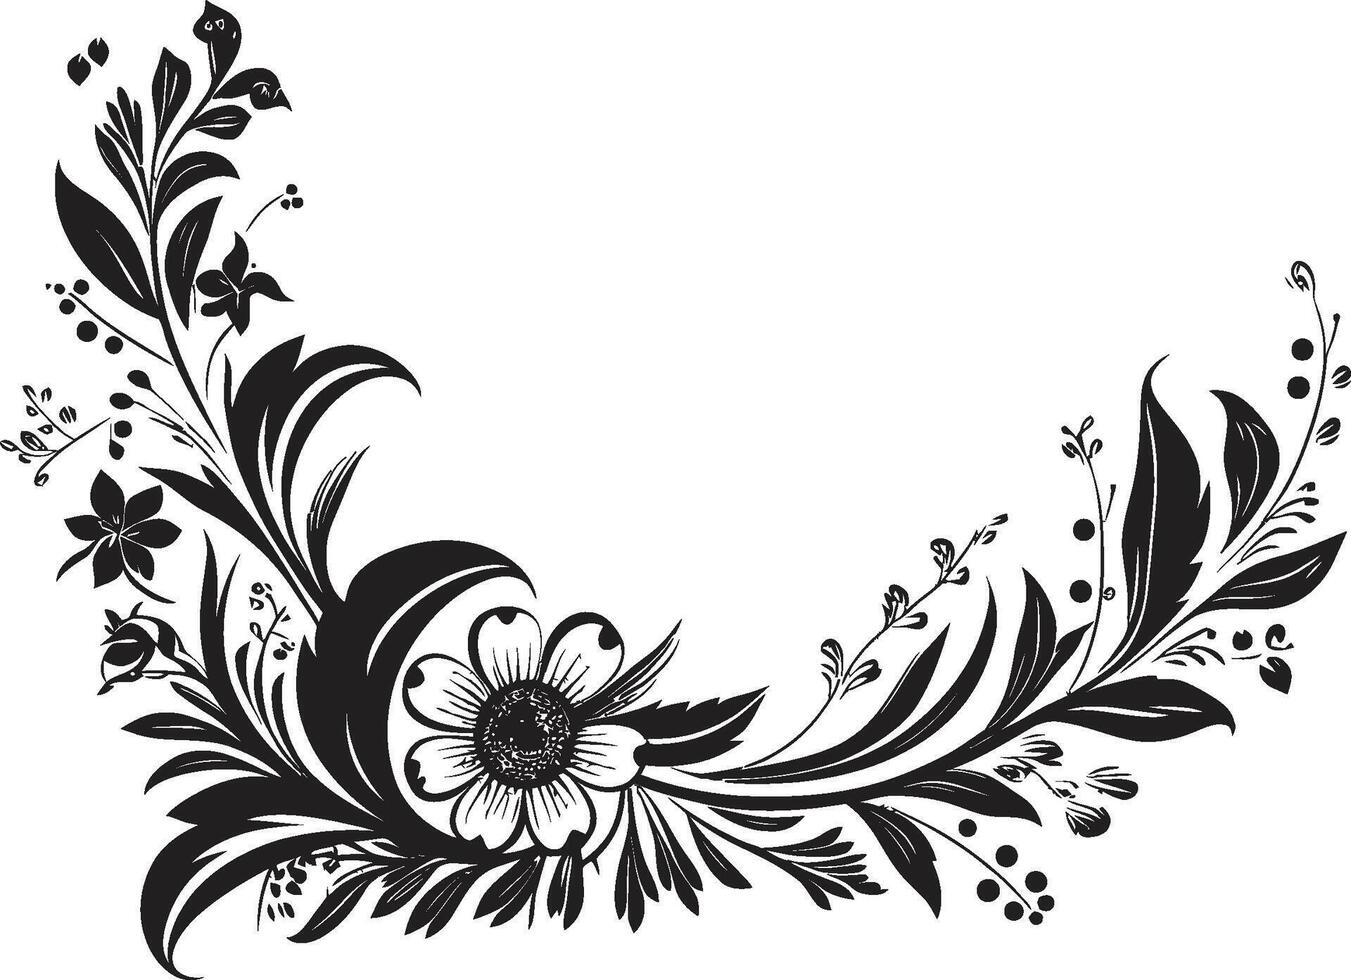 intrincado tintas chique vetor ícone com Preto rabisco decorativo elemento fantasioso floresce lustroso emblema destacando decorativo rabiscos